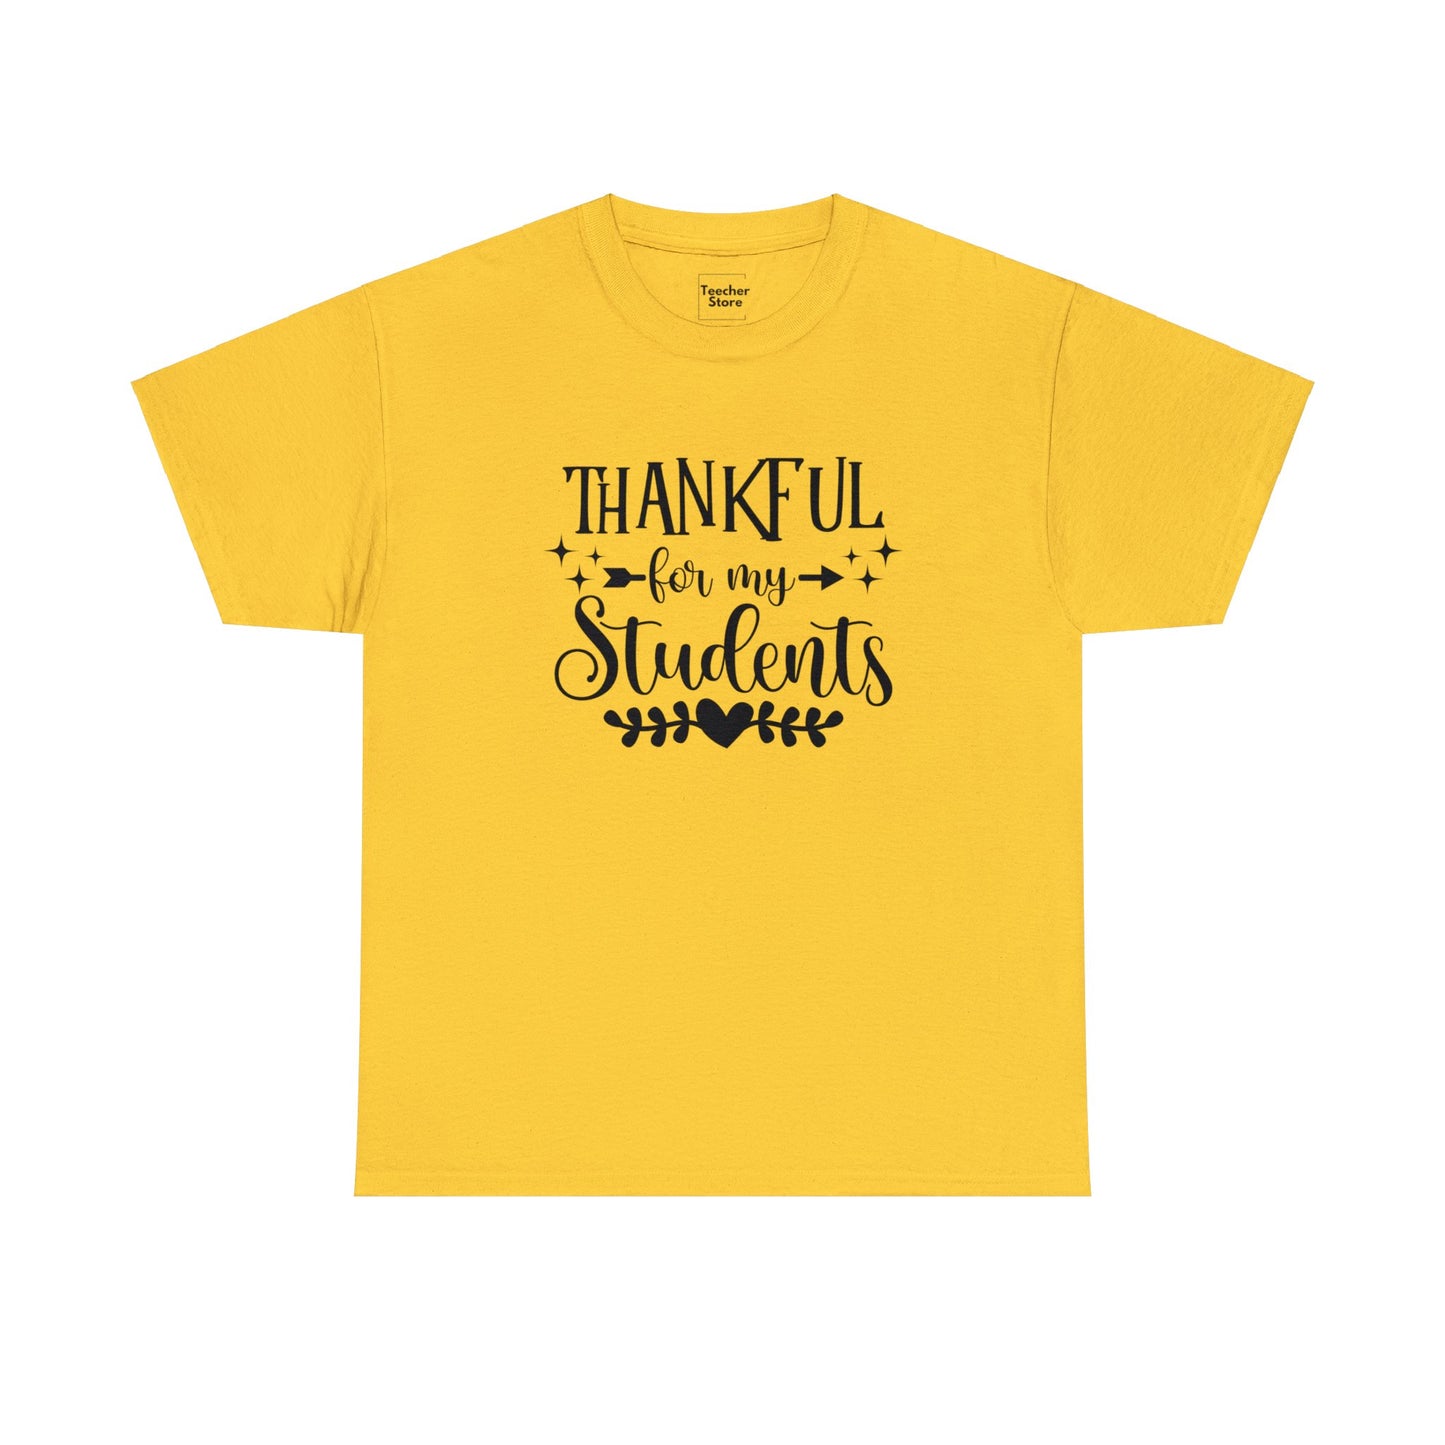 Thankful Students Tee-Shirt